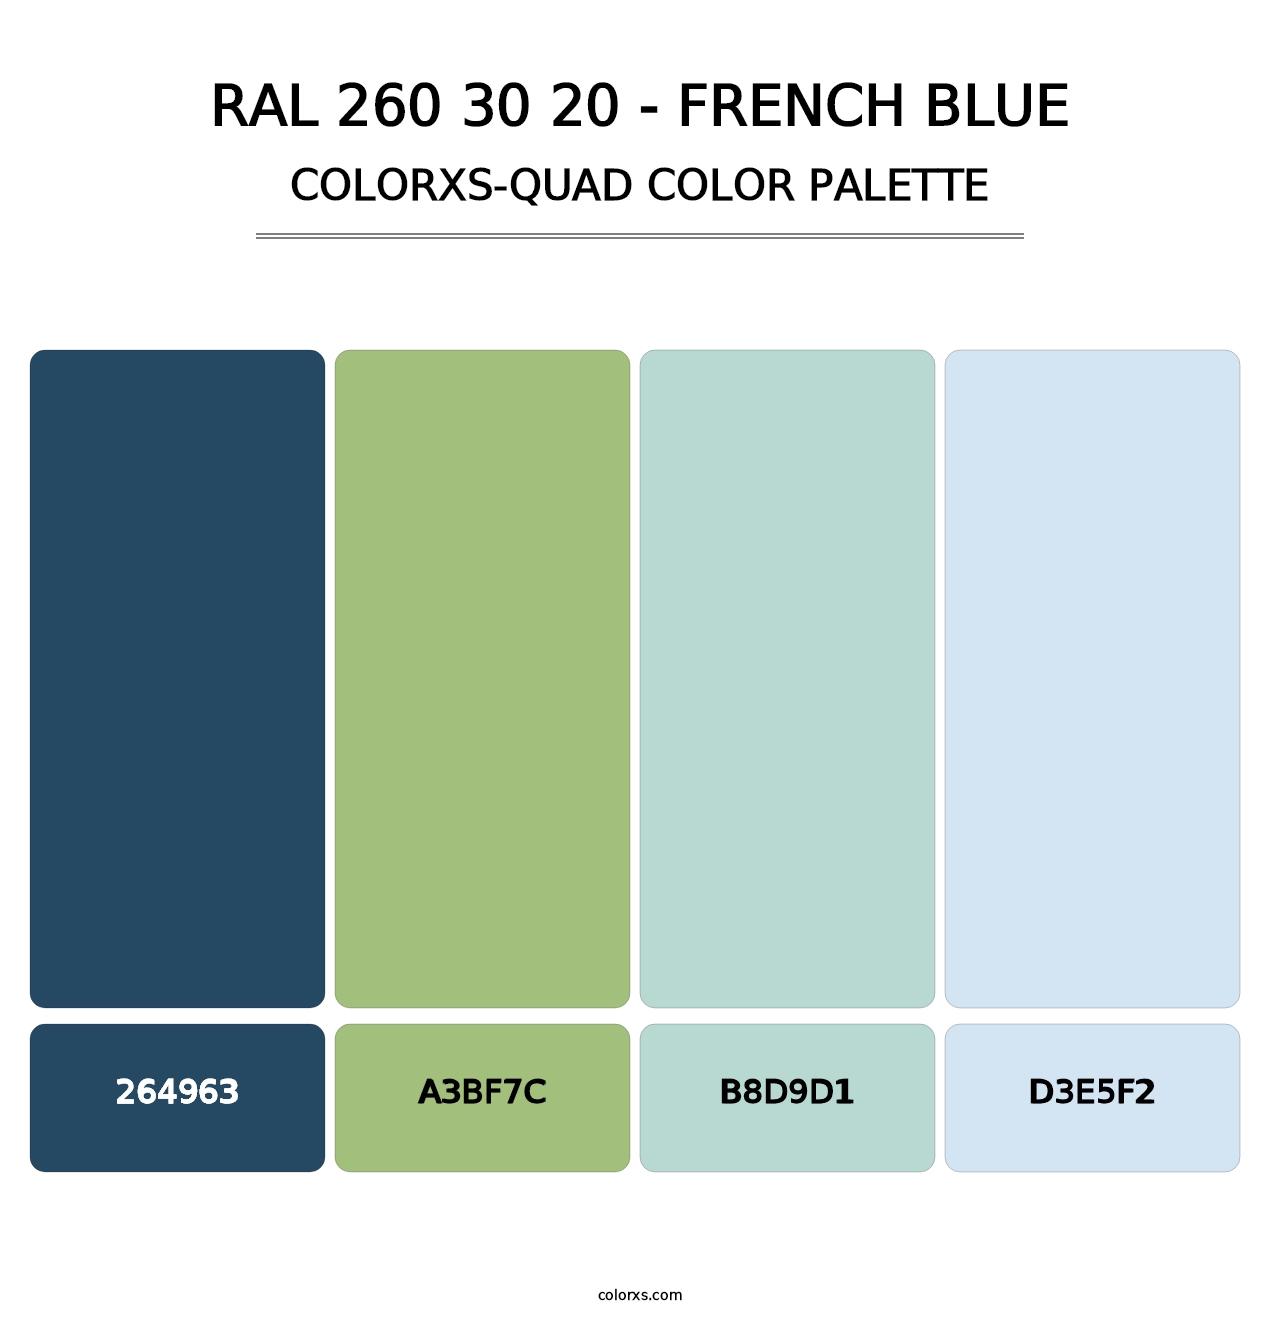 RAL 260 30 20 - French Blue - Colorxs Quad Palette